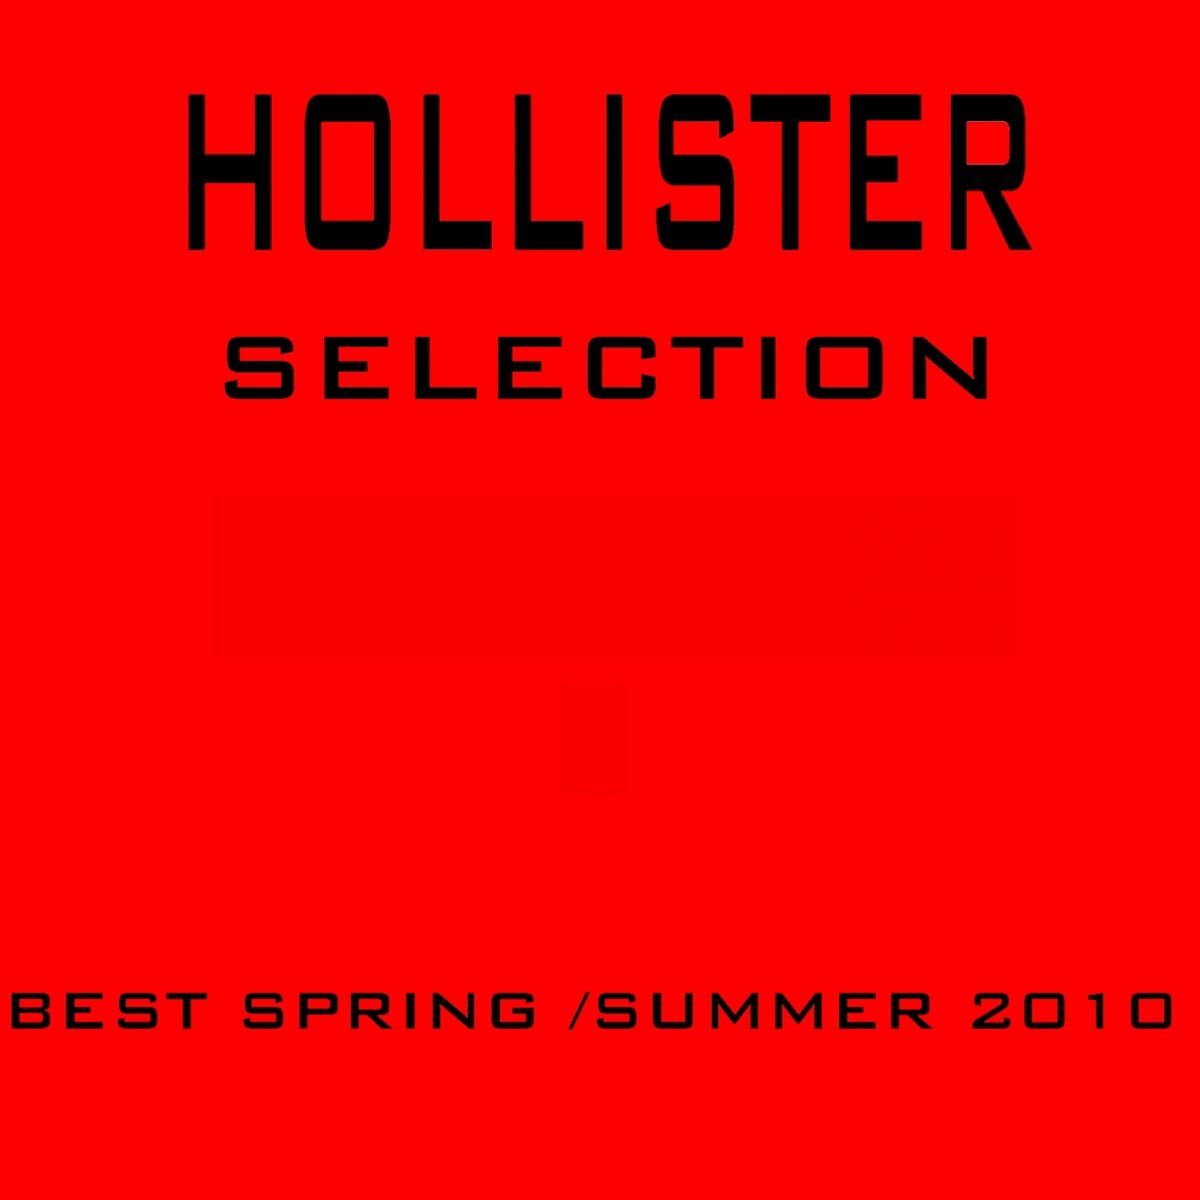 hollister playlist 2010